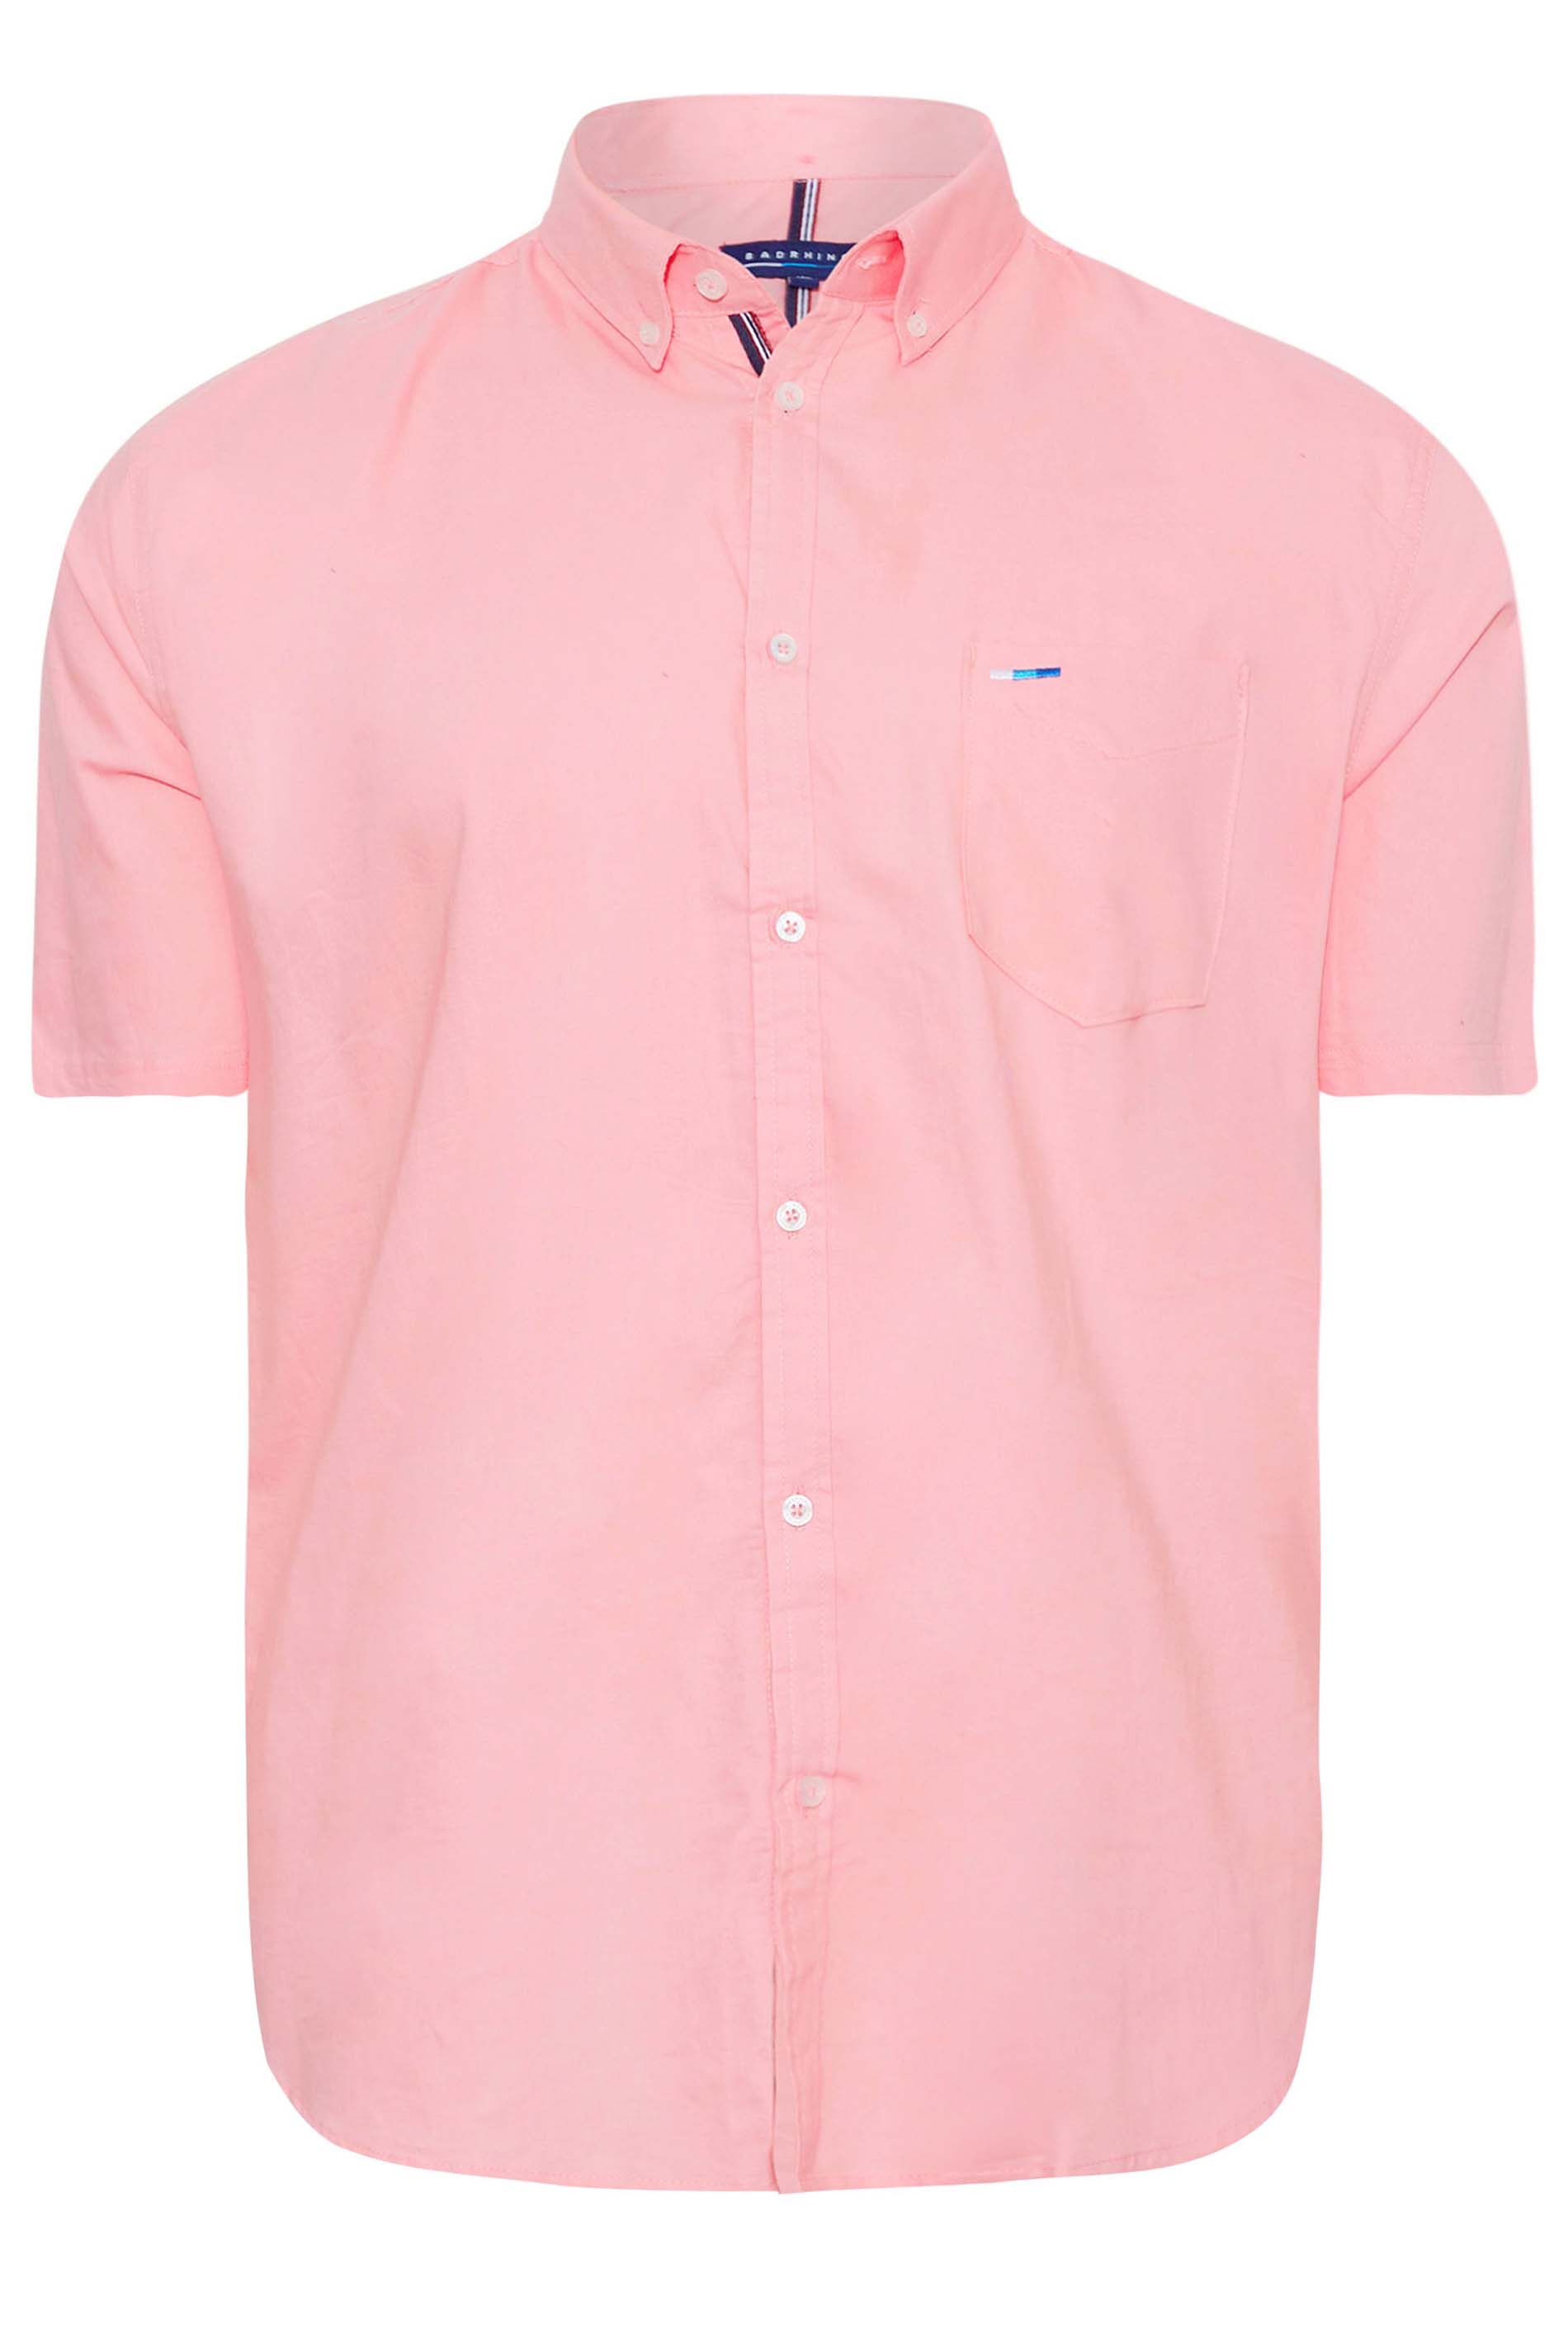 BadRhino Pink Essential Short Sleeve Oxford Shirt | BadRhino 3